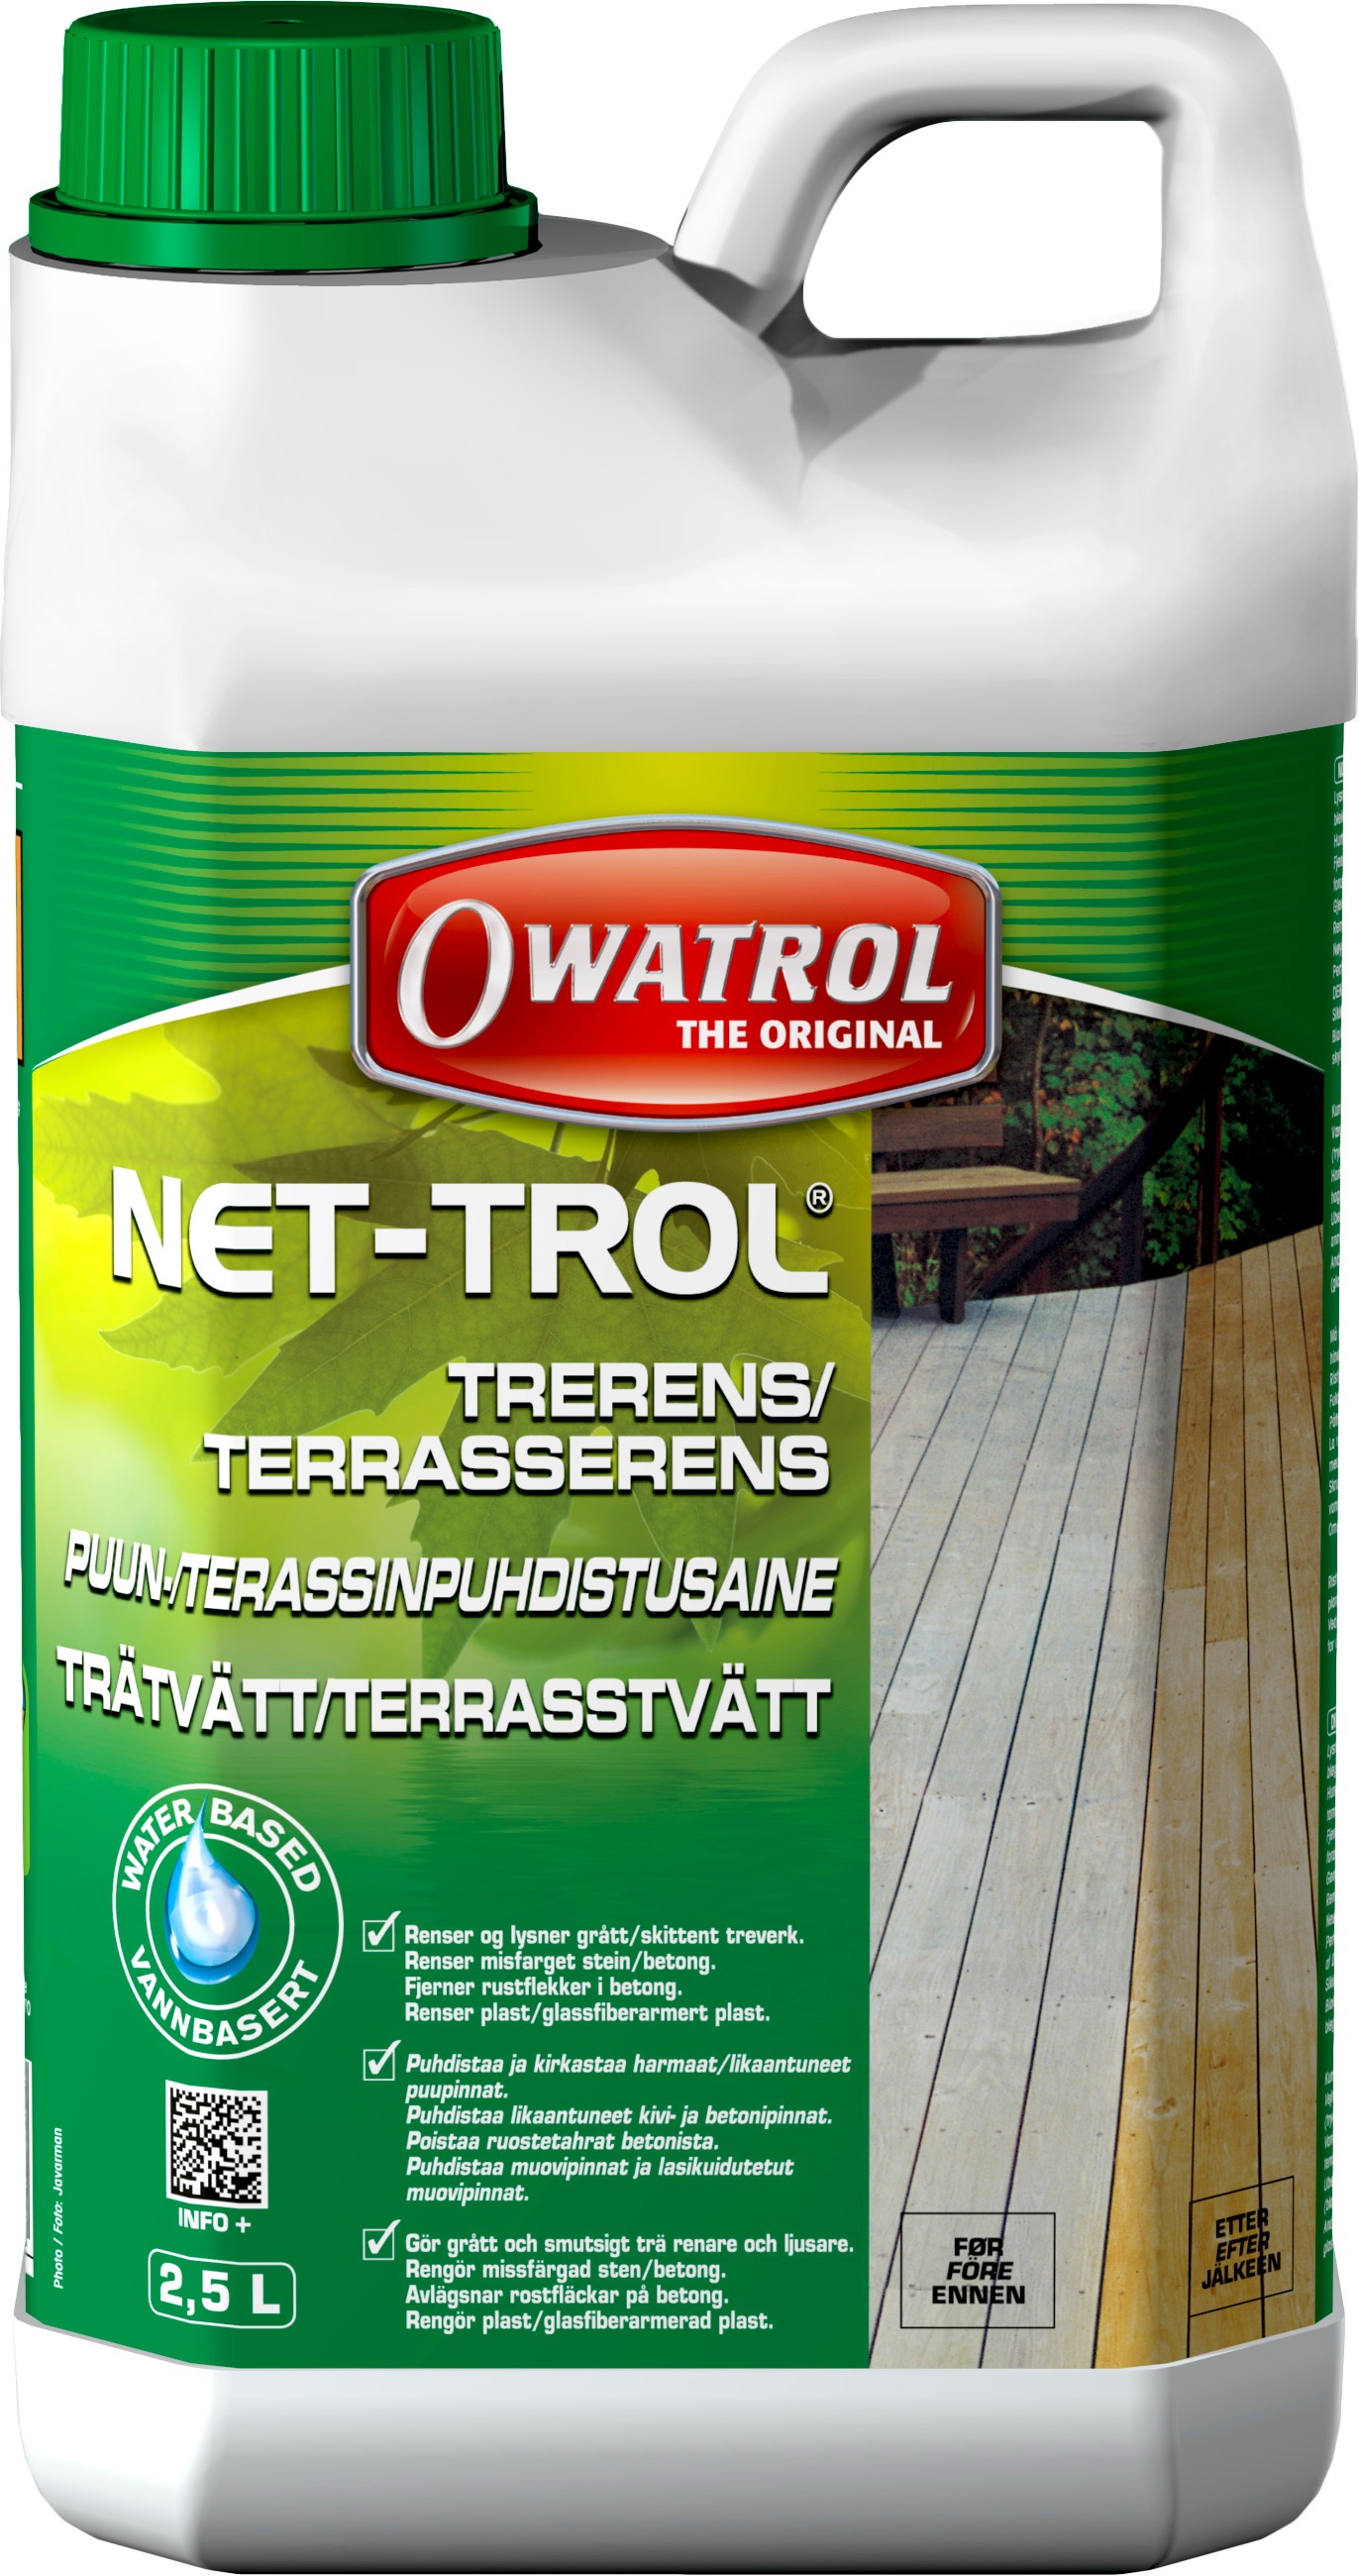 Owatrol Net-Trol trerens